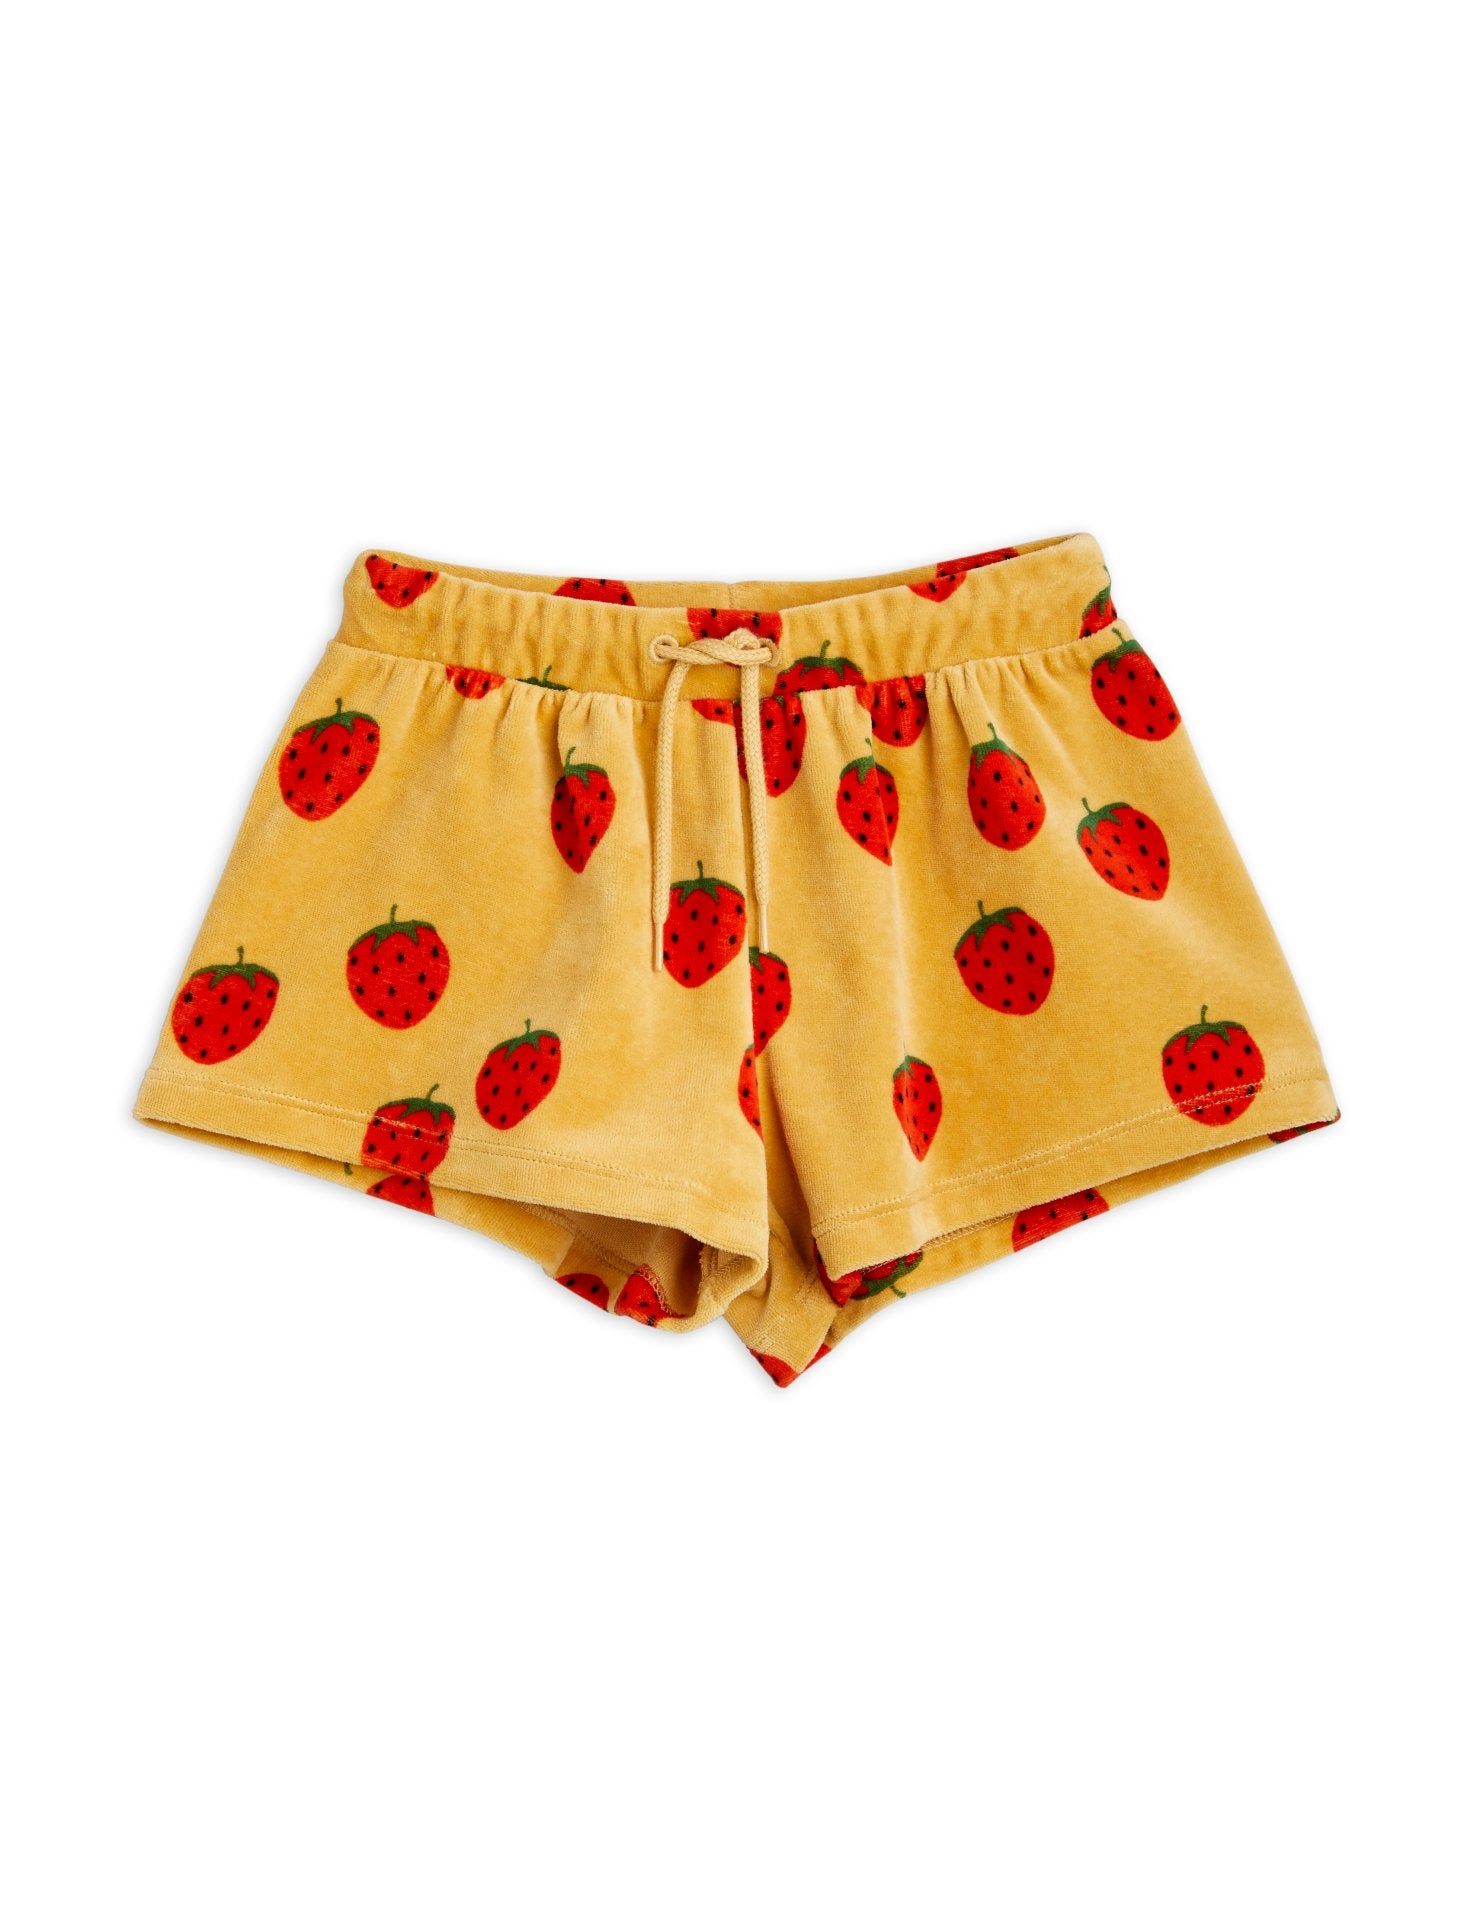 Strawberries velour aop shorts